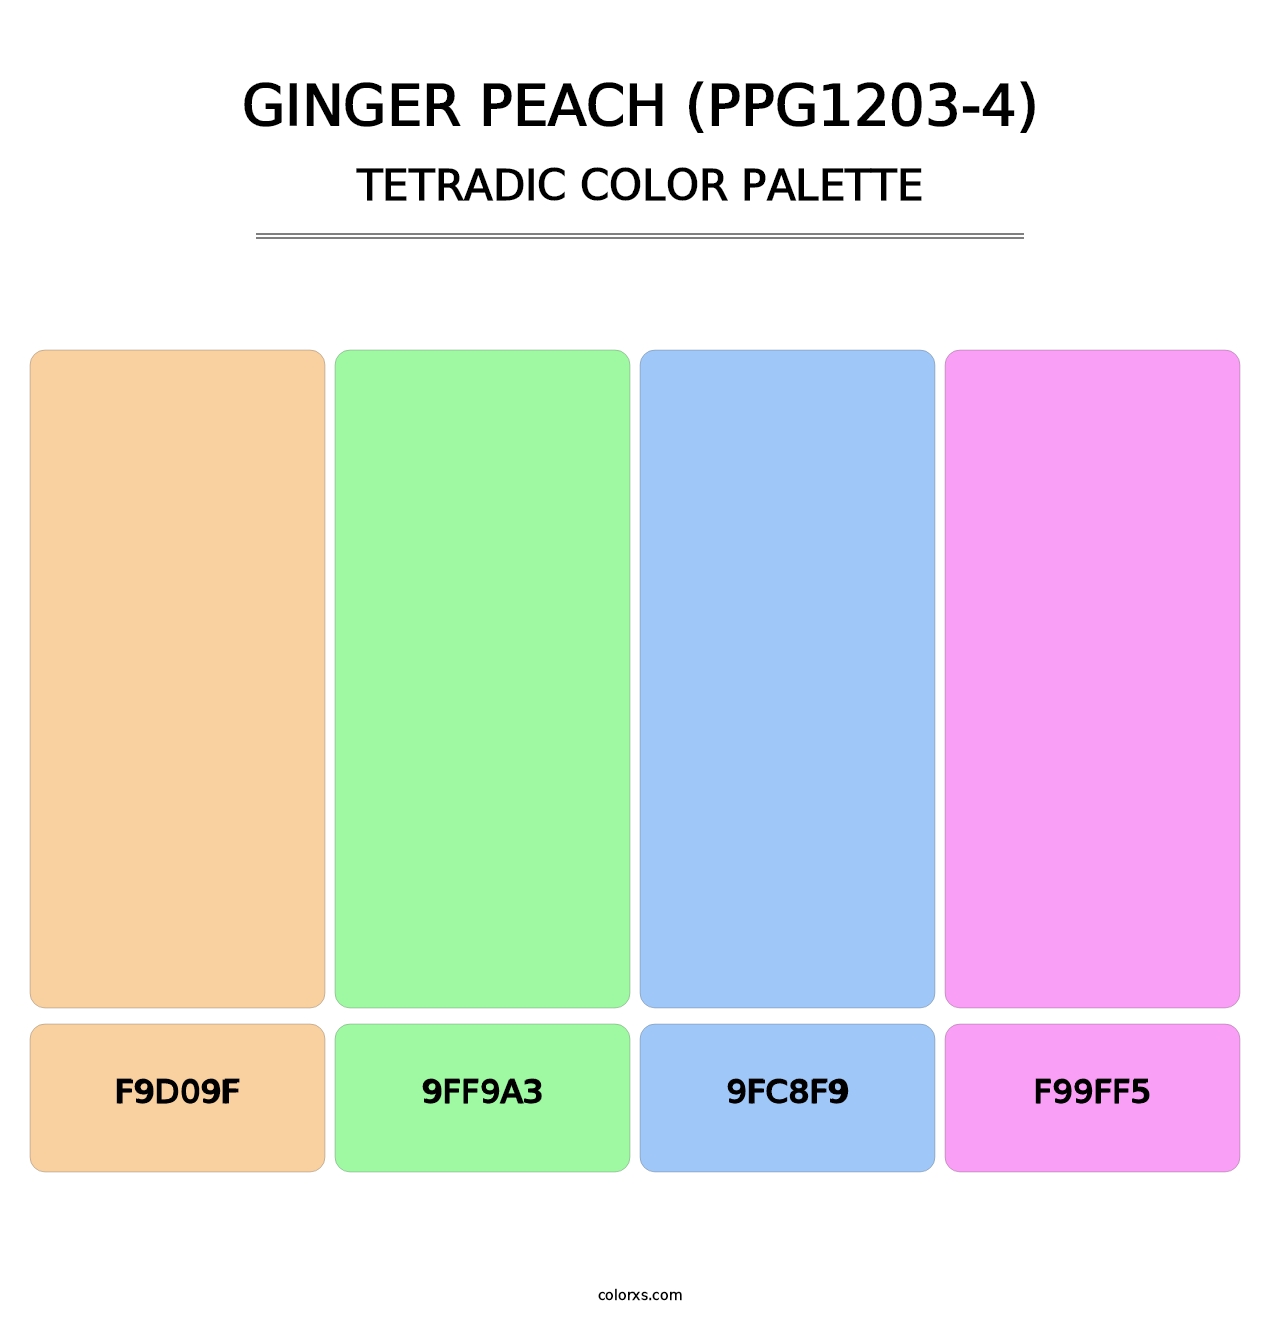 Ginger Peach (PPG1203-4) - Tetradic Color Palette